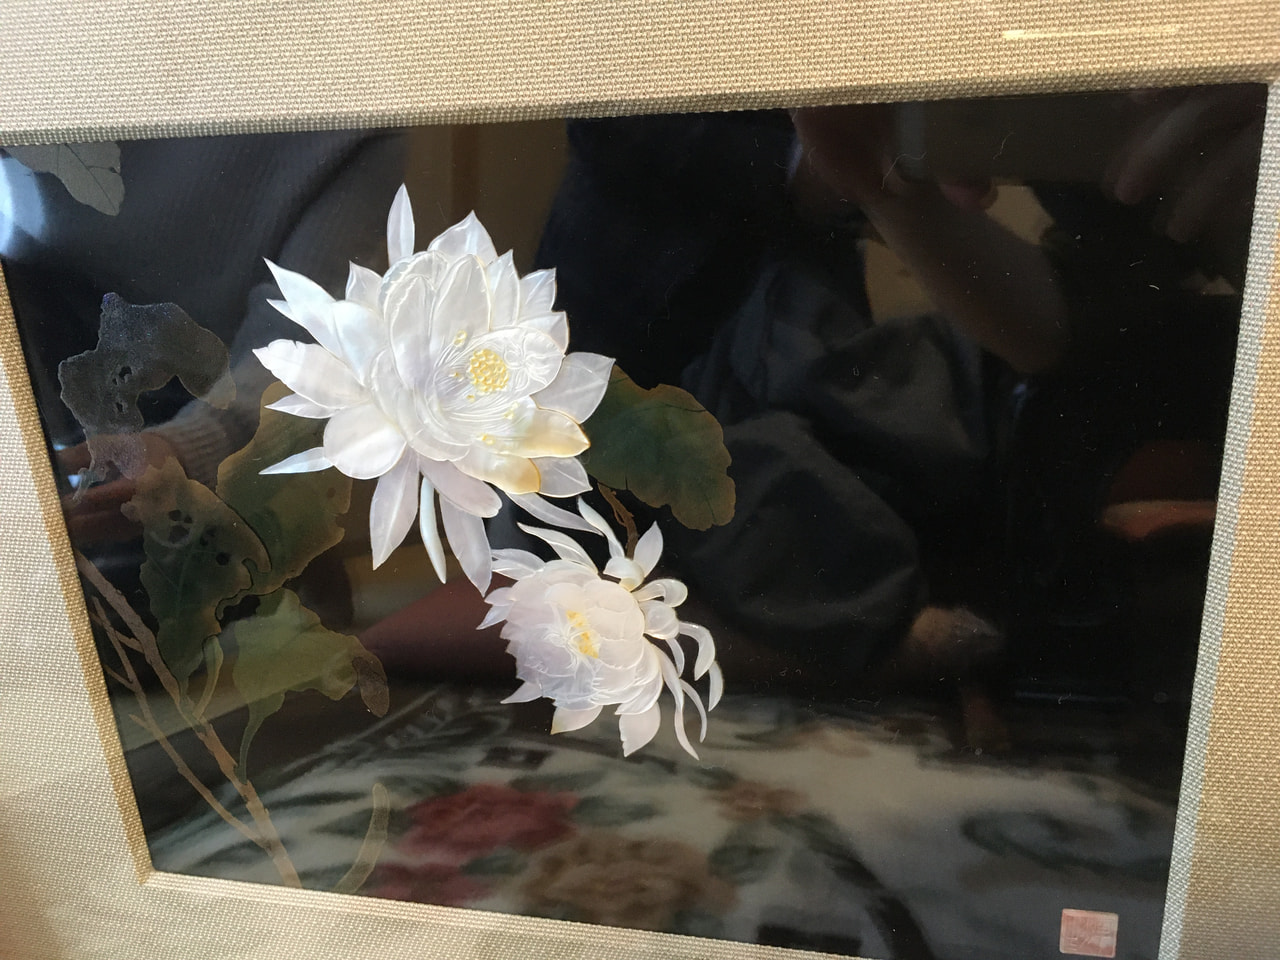 KANAGAWA Muffin - Fm yokohama 84.7
      神奈川の伝統工芸「横浜芝山漆器」